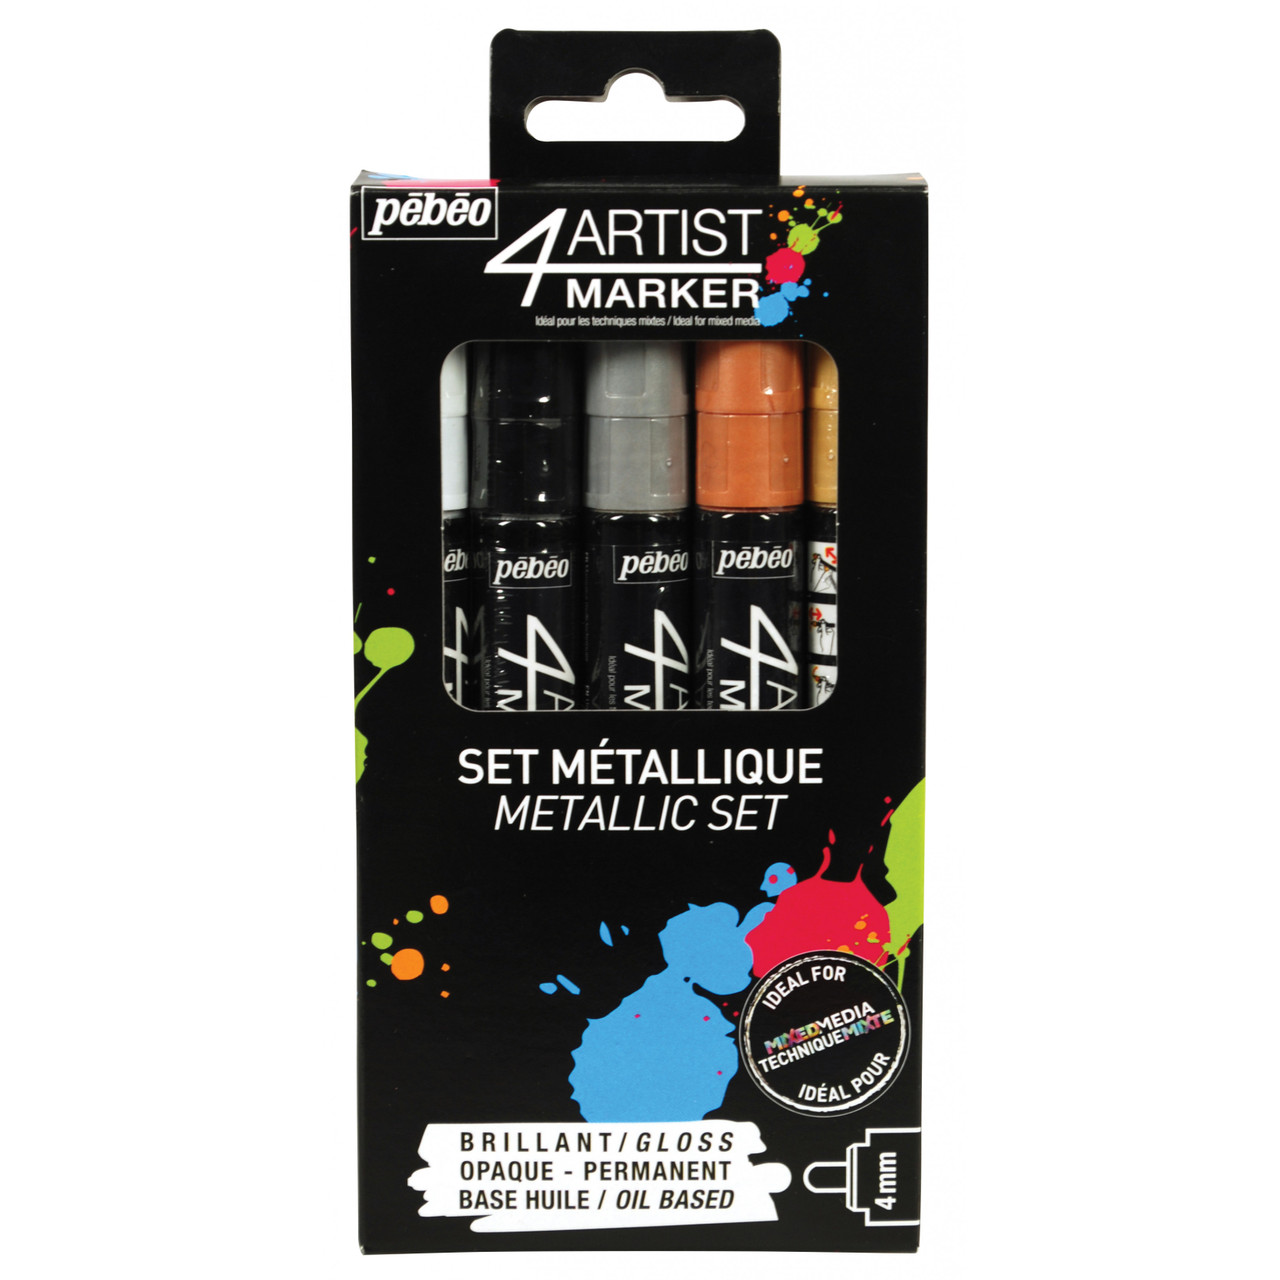 Pebeo 4Artist Marker 4mm Set of 5 Metallic Colours